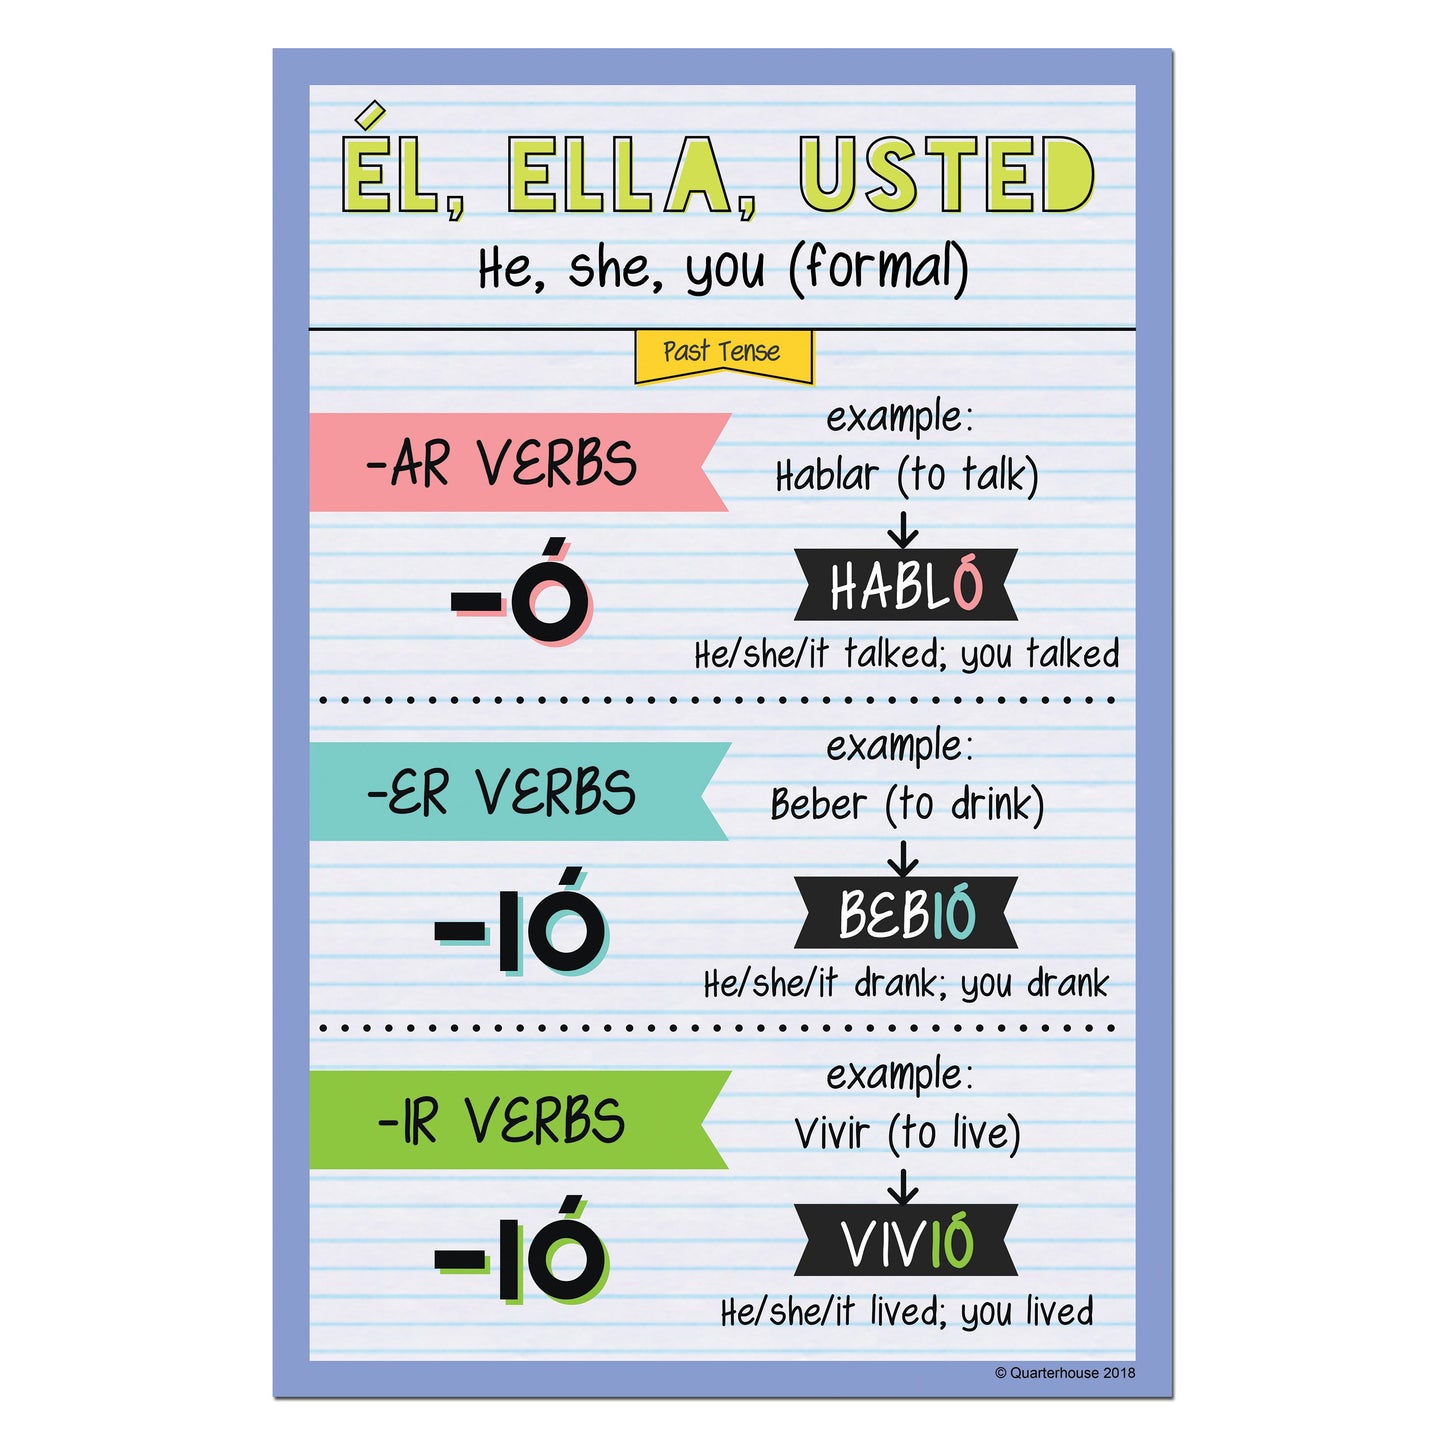 Quarterhouse Él, Ella, Usted - Past Tense Spanish Verb Conjugation Poster, Spanish and ESL Classroom Materials for Teachers